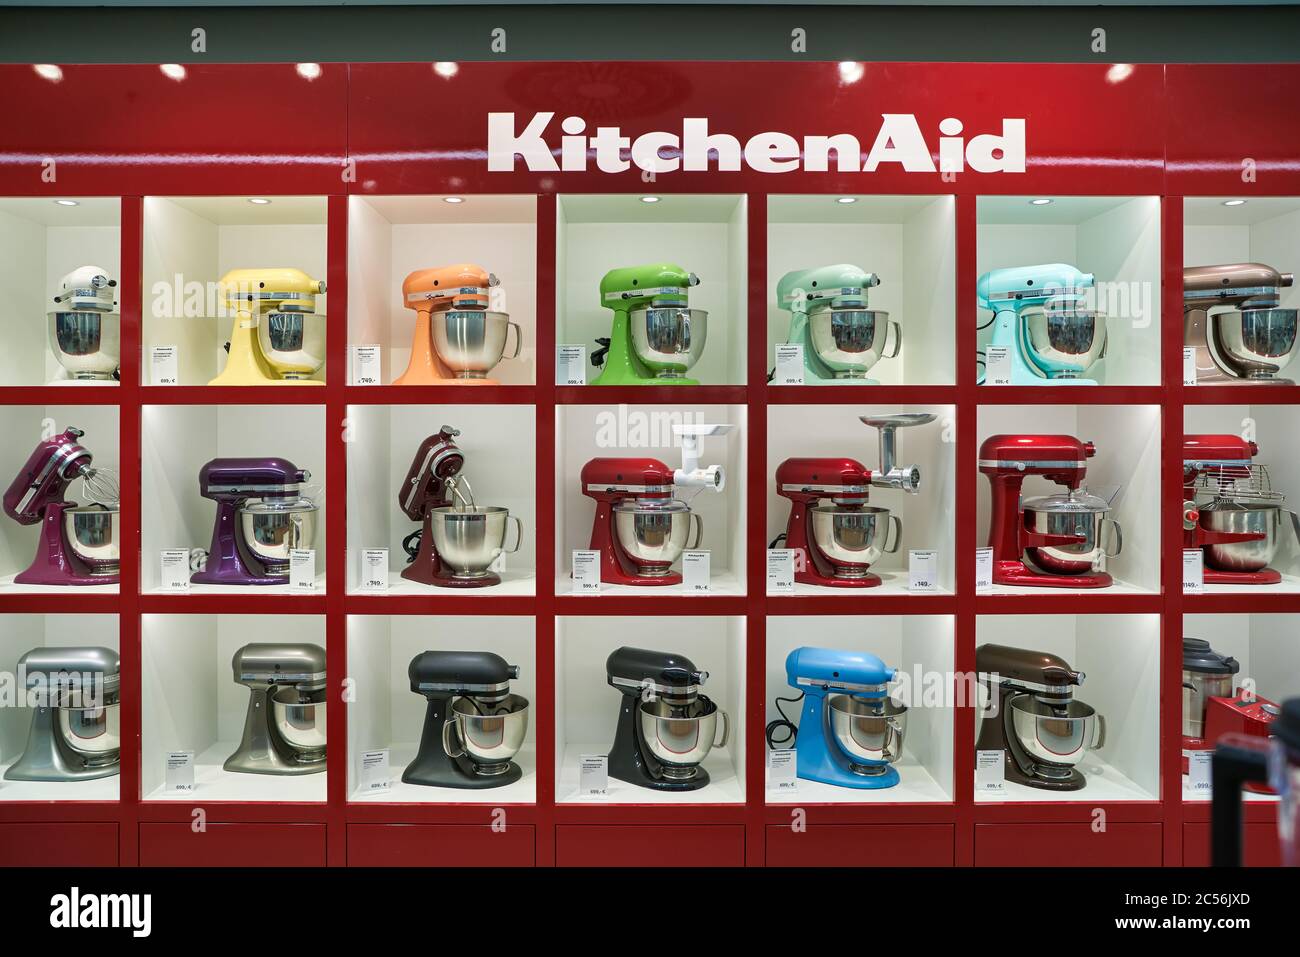 https://c8.alamy.com/comp/2C56JXD/berlin-germany-circa-september-2019-kitchenaid-products-on-display-at-the-kaufhaus-des-westens-kadewe-department-store-in-berlin-kitchenaid-is-2C56JXD.jpg